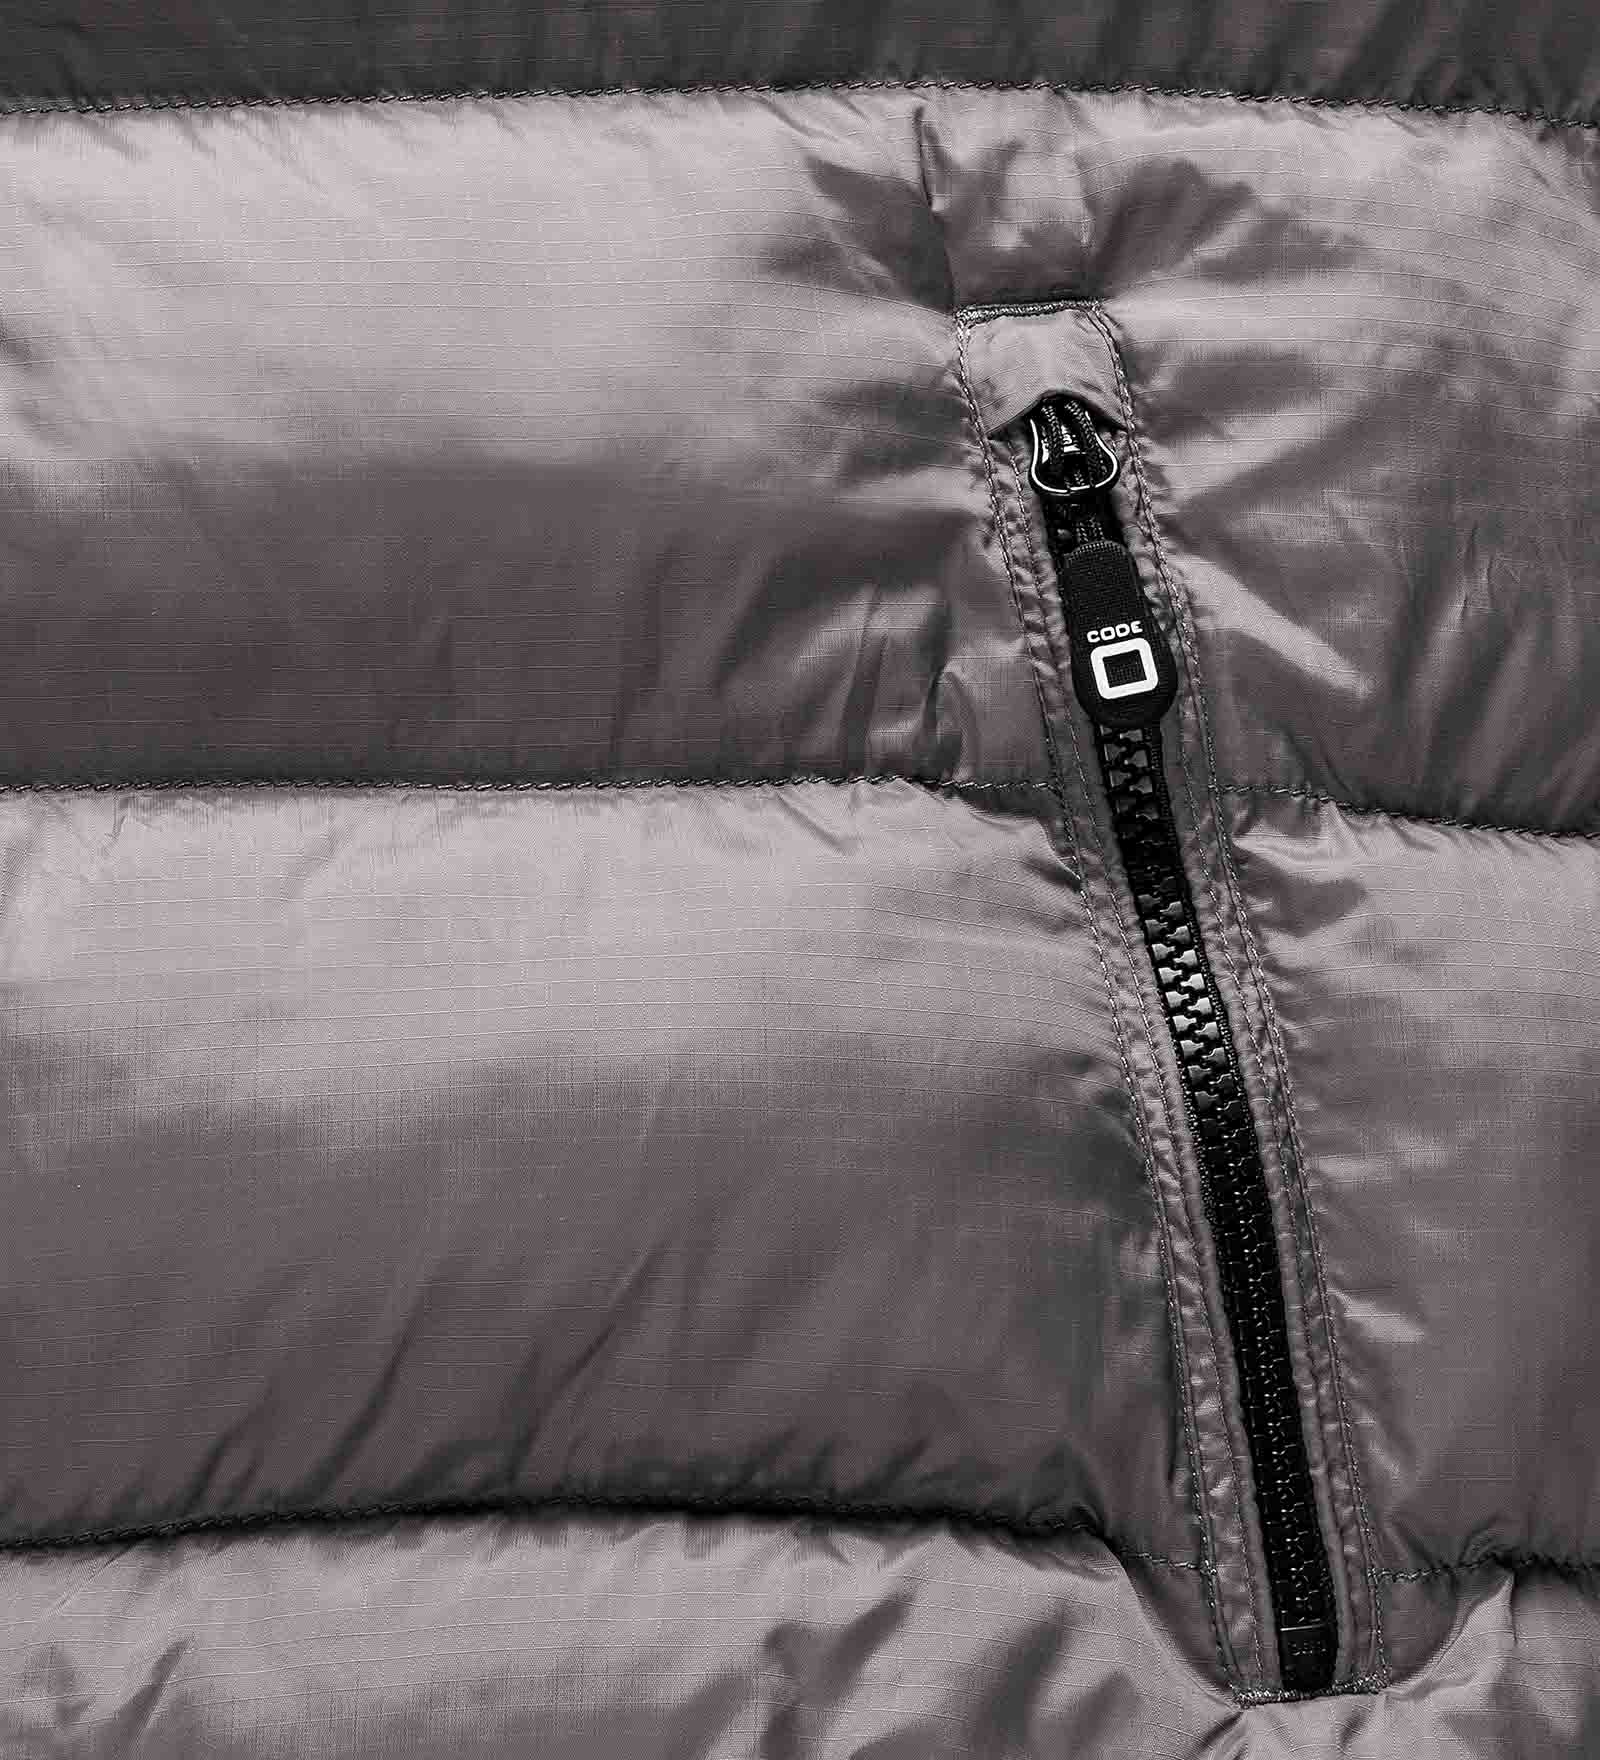 CODE-ZERO Puffer Jacket Women Monte Baldo Grey S